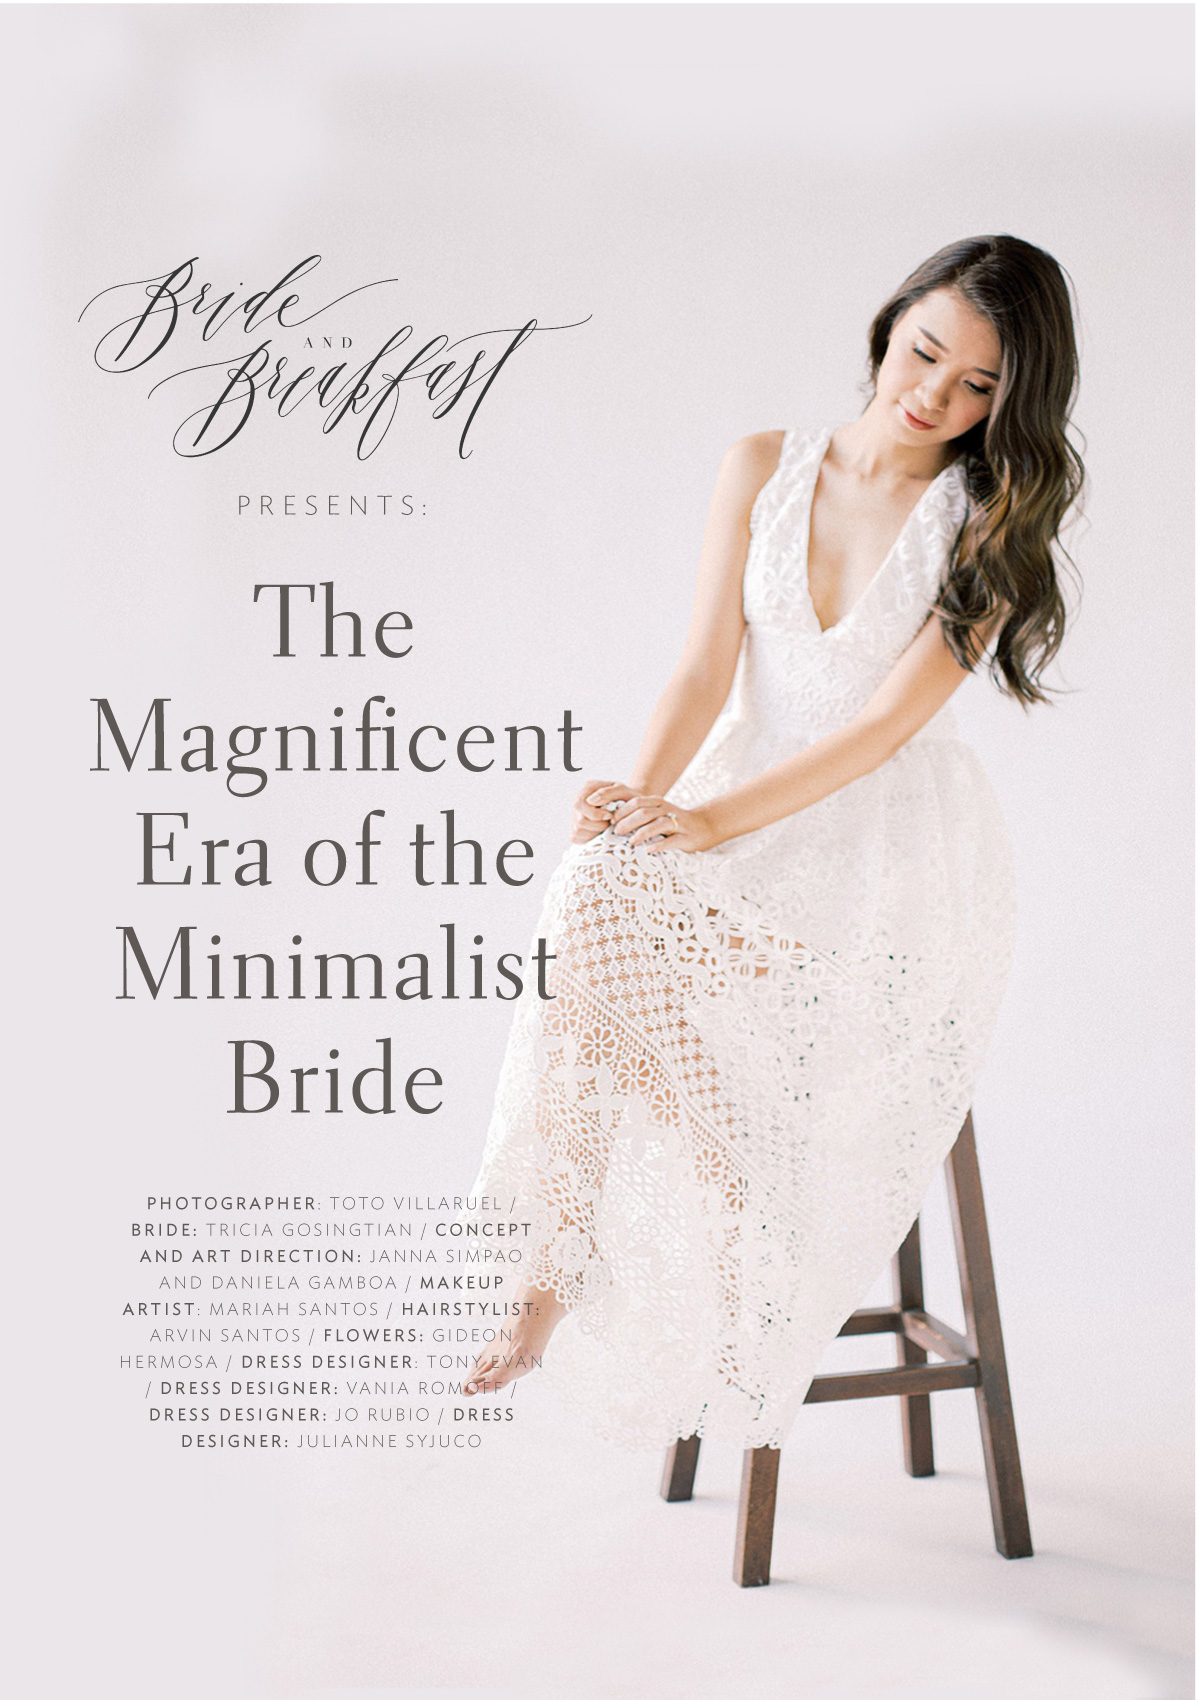 Bride and Breakfast presents: The Magnificent Era of the Minimalist Bride